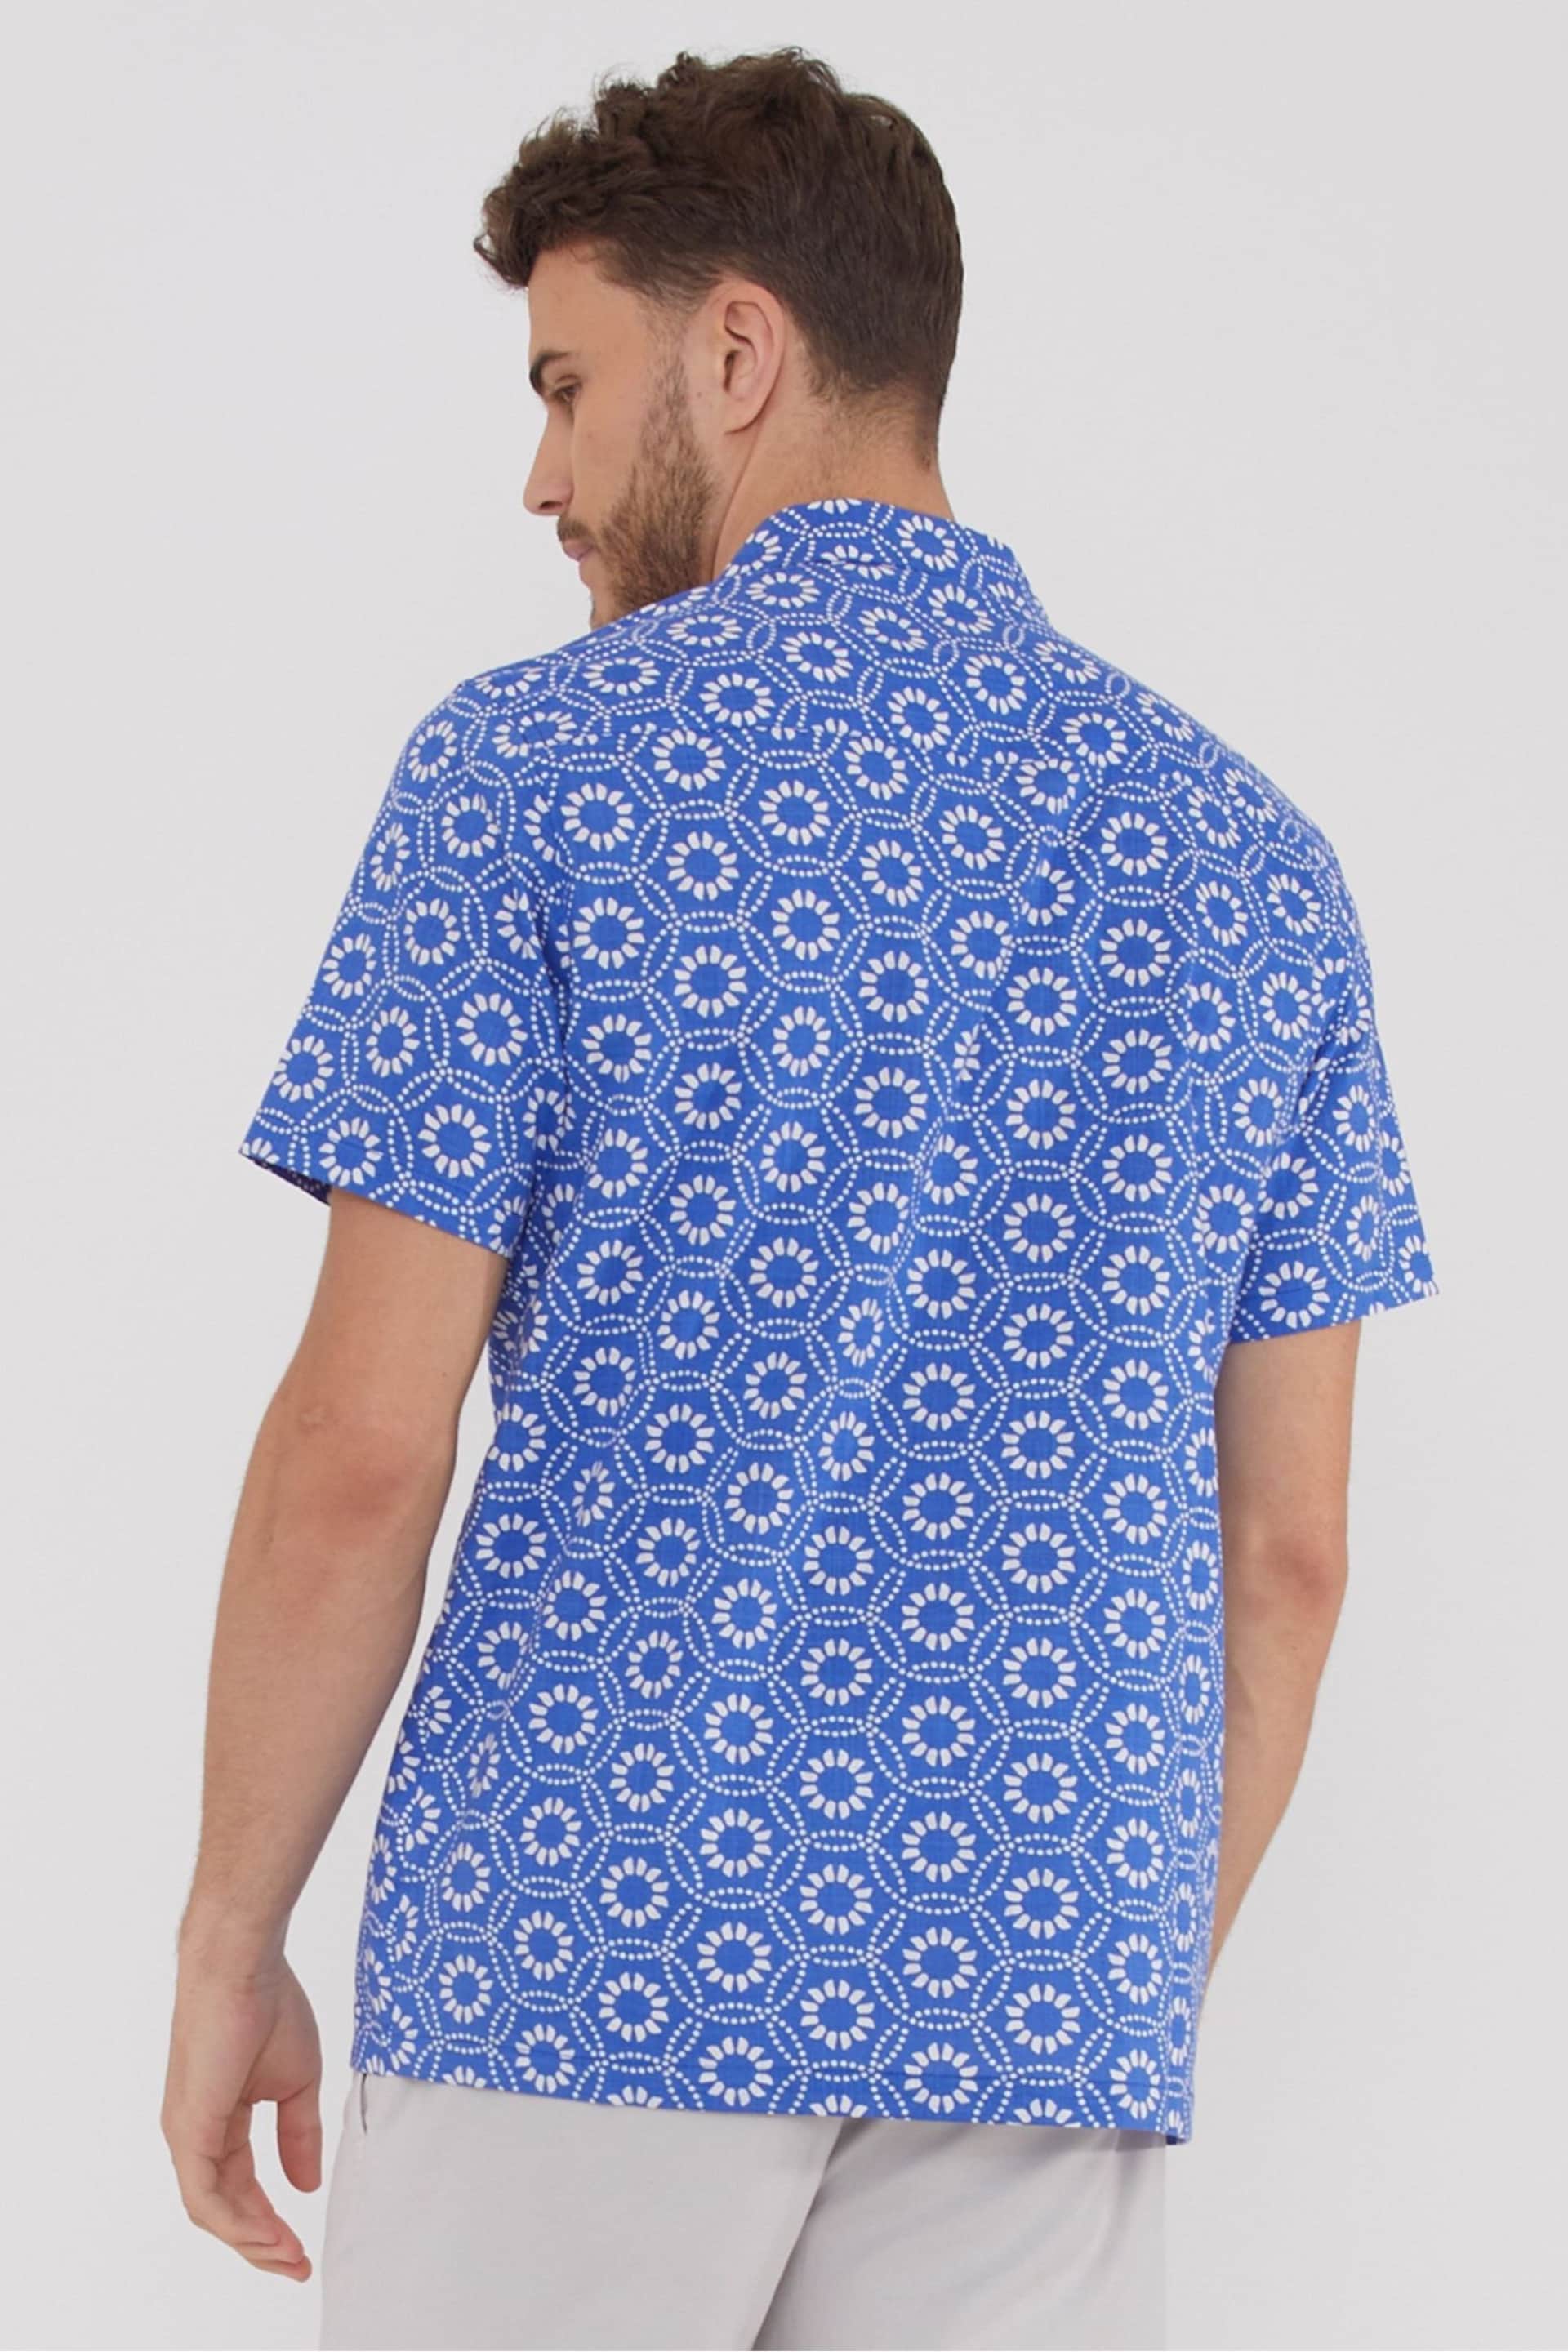 Threadbare Bright Blue Short Sleeve Floral Print Cotton Shirt - Image 2 of 5